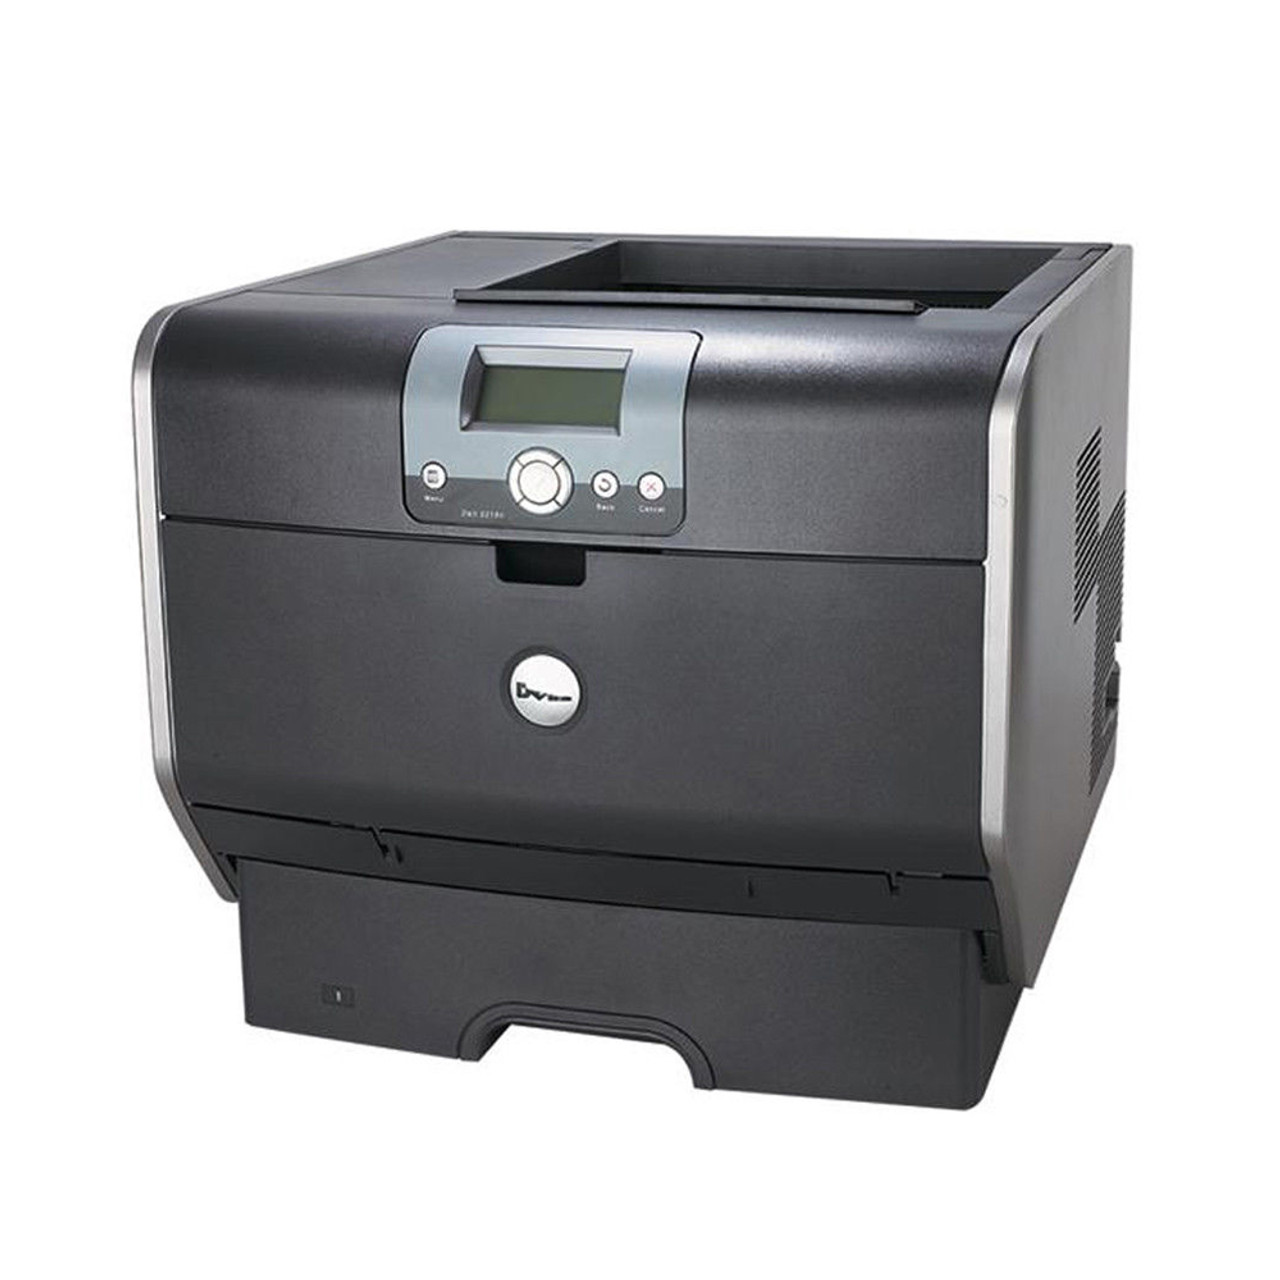 5210n Mono Laser Printer